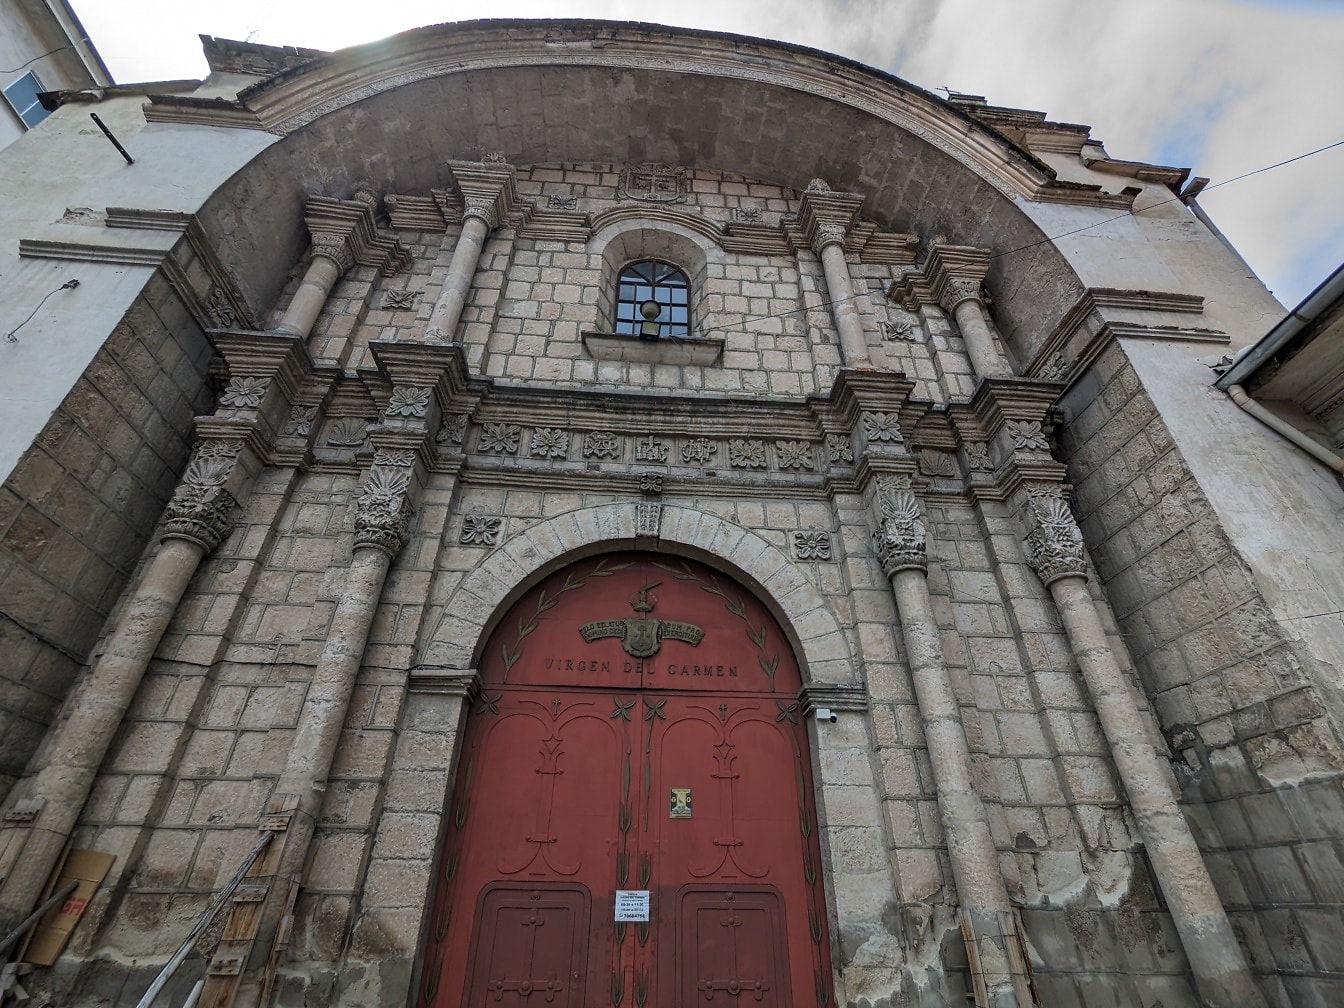 Pintu masuk ke gereja perawan Carmen dengan pintu masuk merah yang terbuat dari besi cor